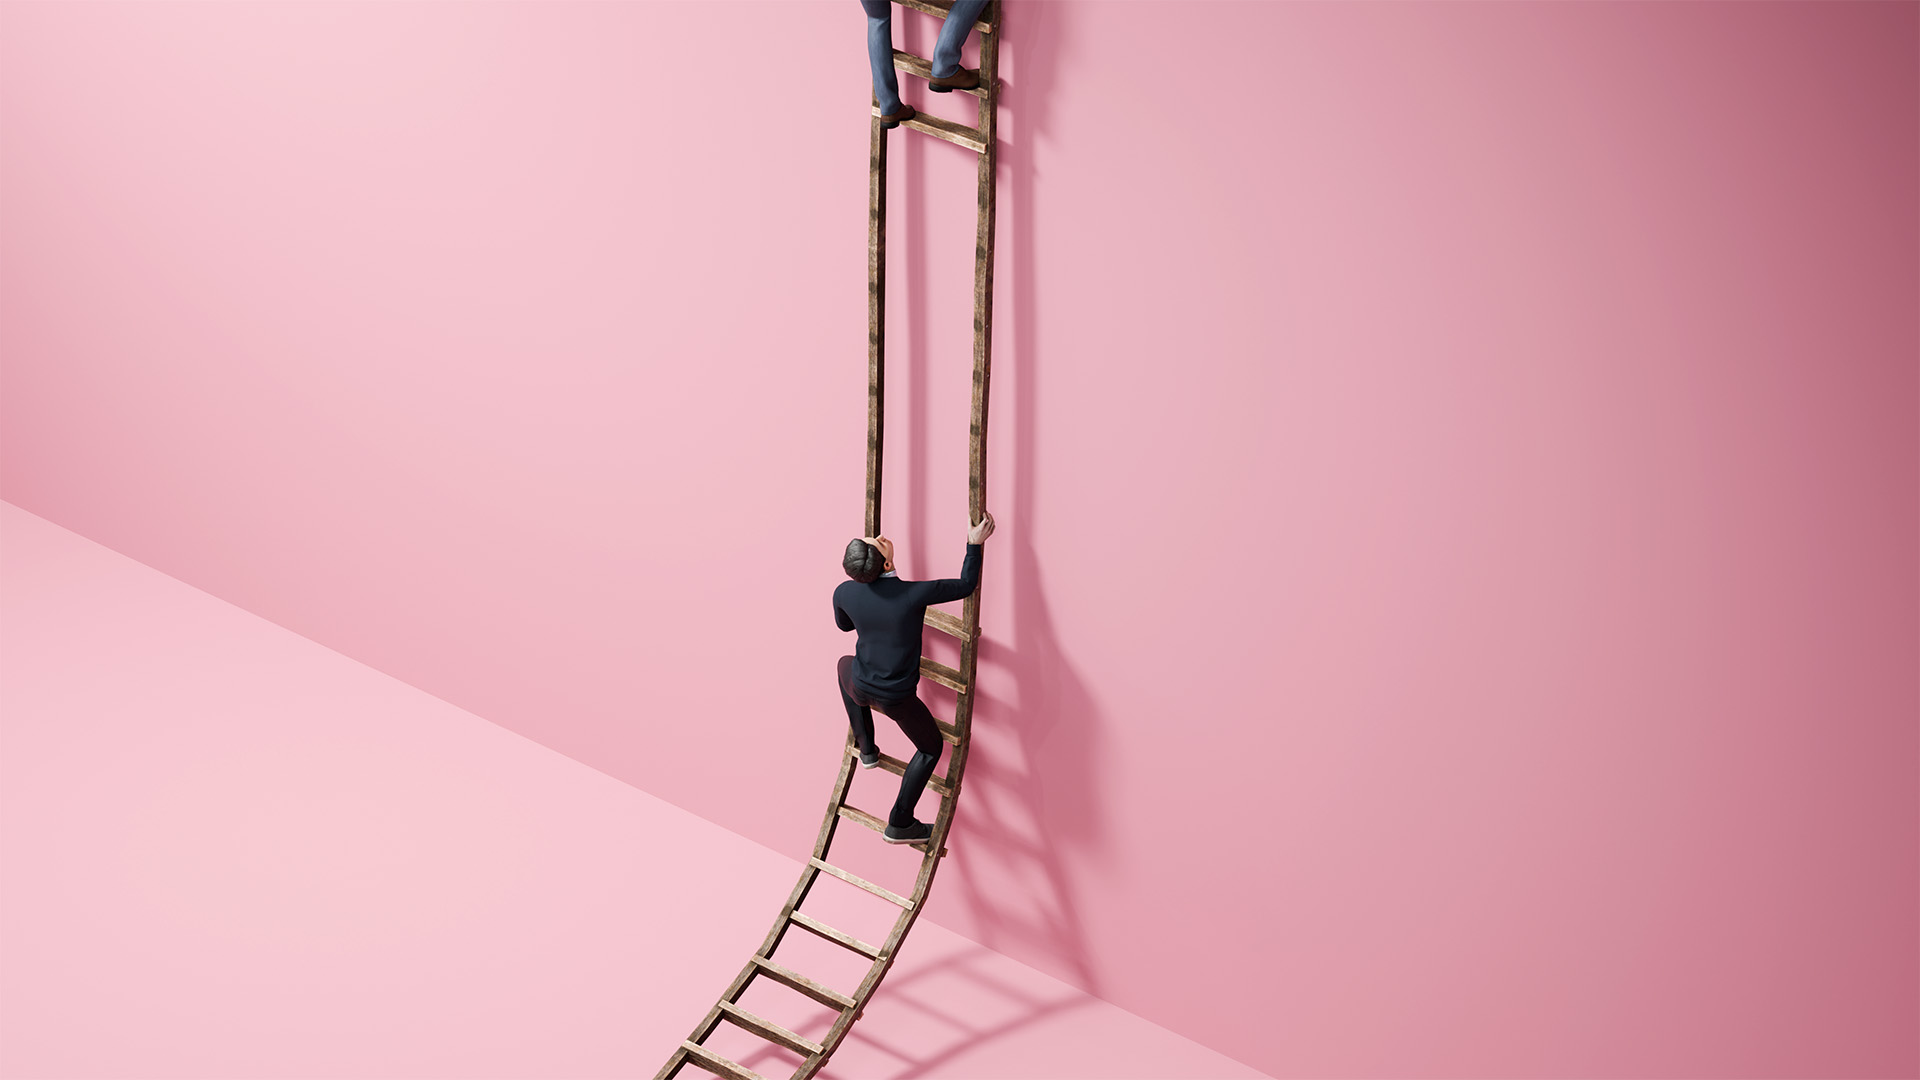 The housing ladder